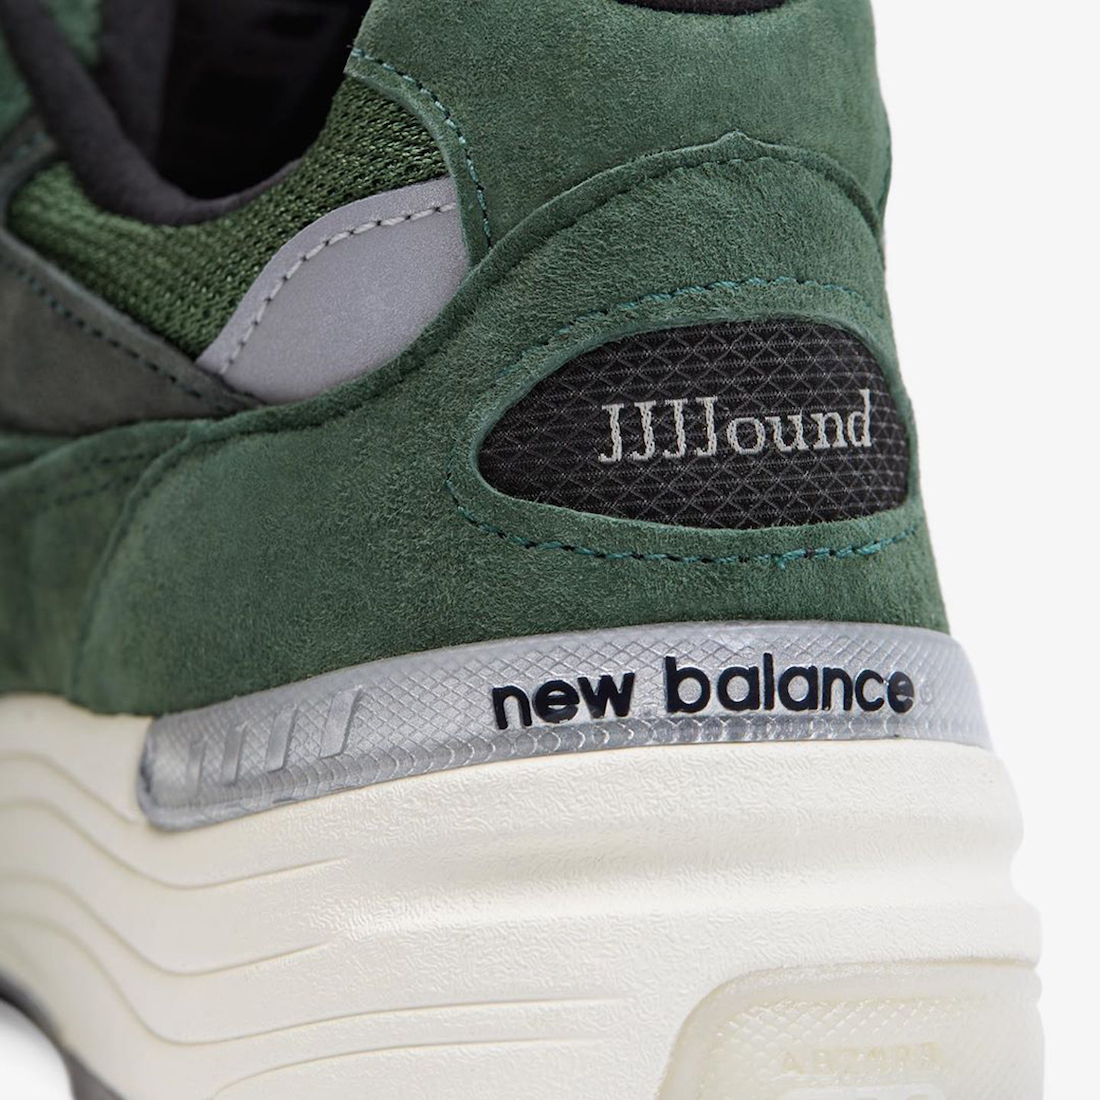 JJJJound x New Balance 992 Release Date